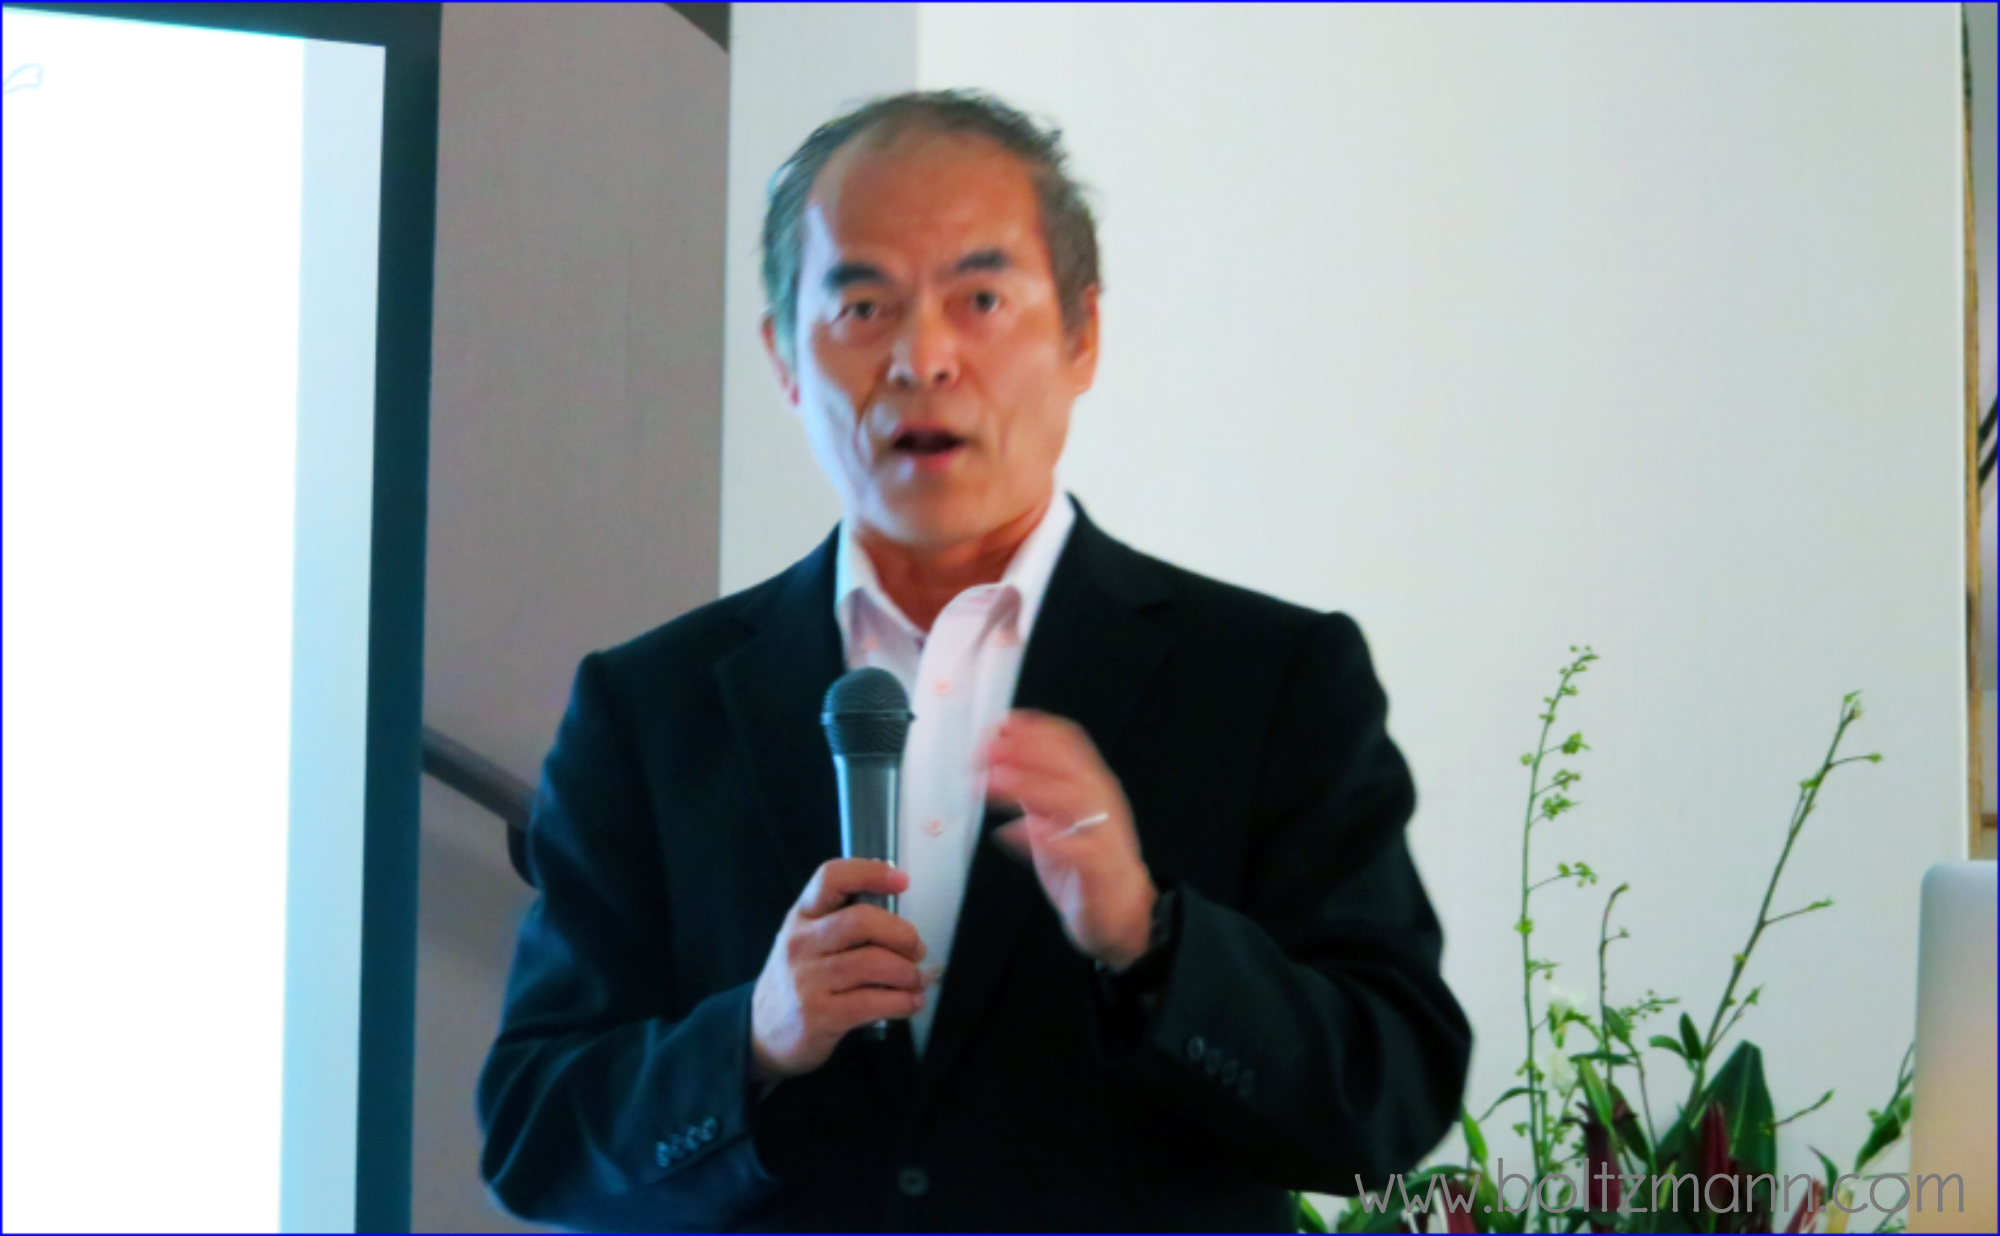 Shuji Nakamura, Isamu Akasaki, Hiroshi Amano win Nobel Prize in Physics 2014 for the blue LED